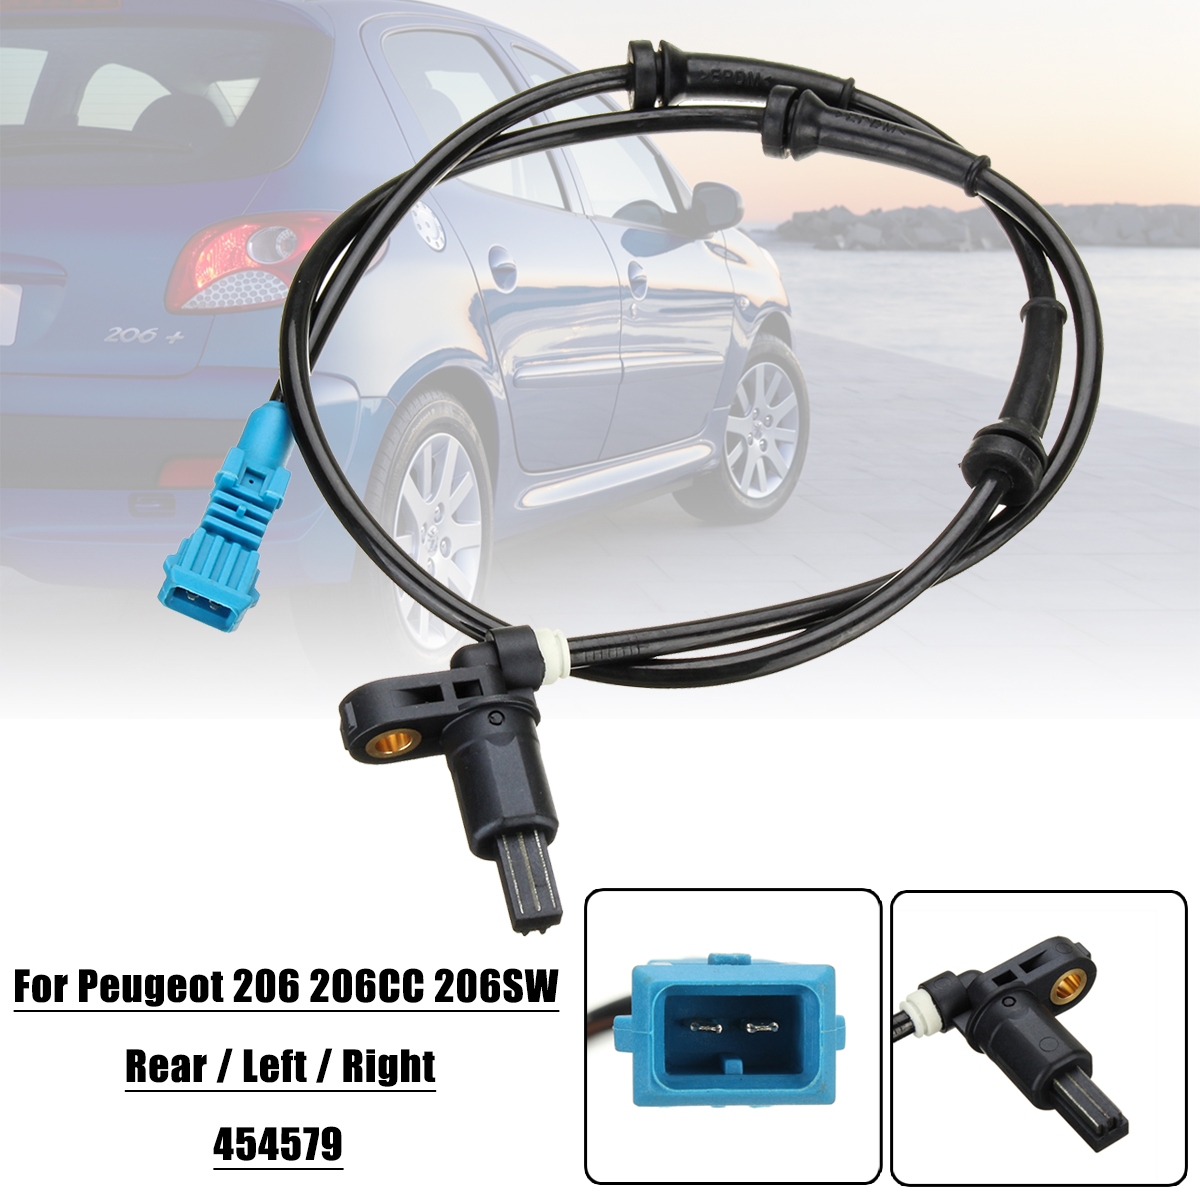 Car-ABS-Wheel-Speed-Sensor-Rear-Left-amp-Right-for-Peugeot-206-206CC-206SW-454579-1284699